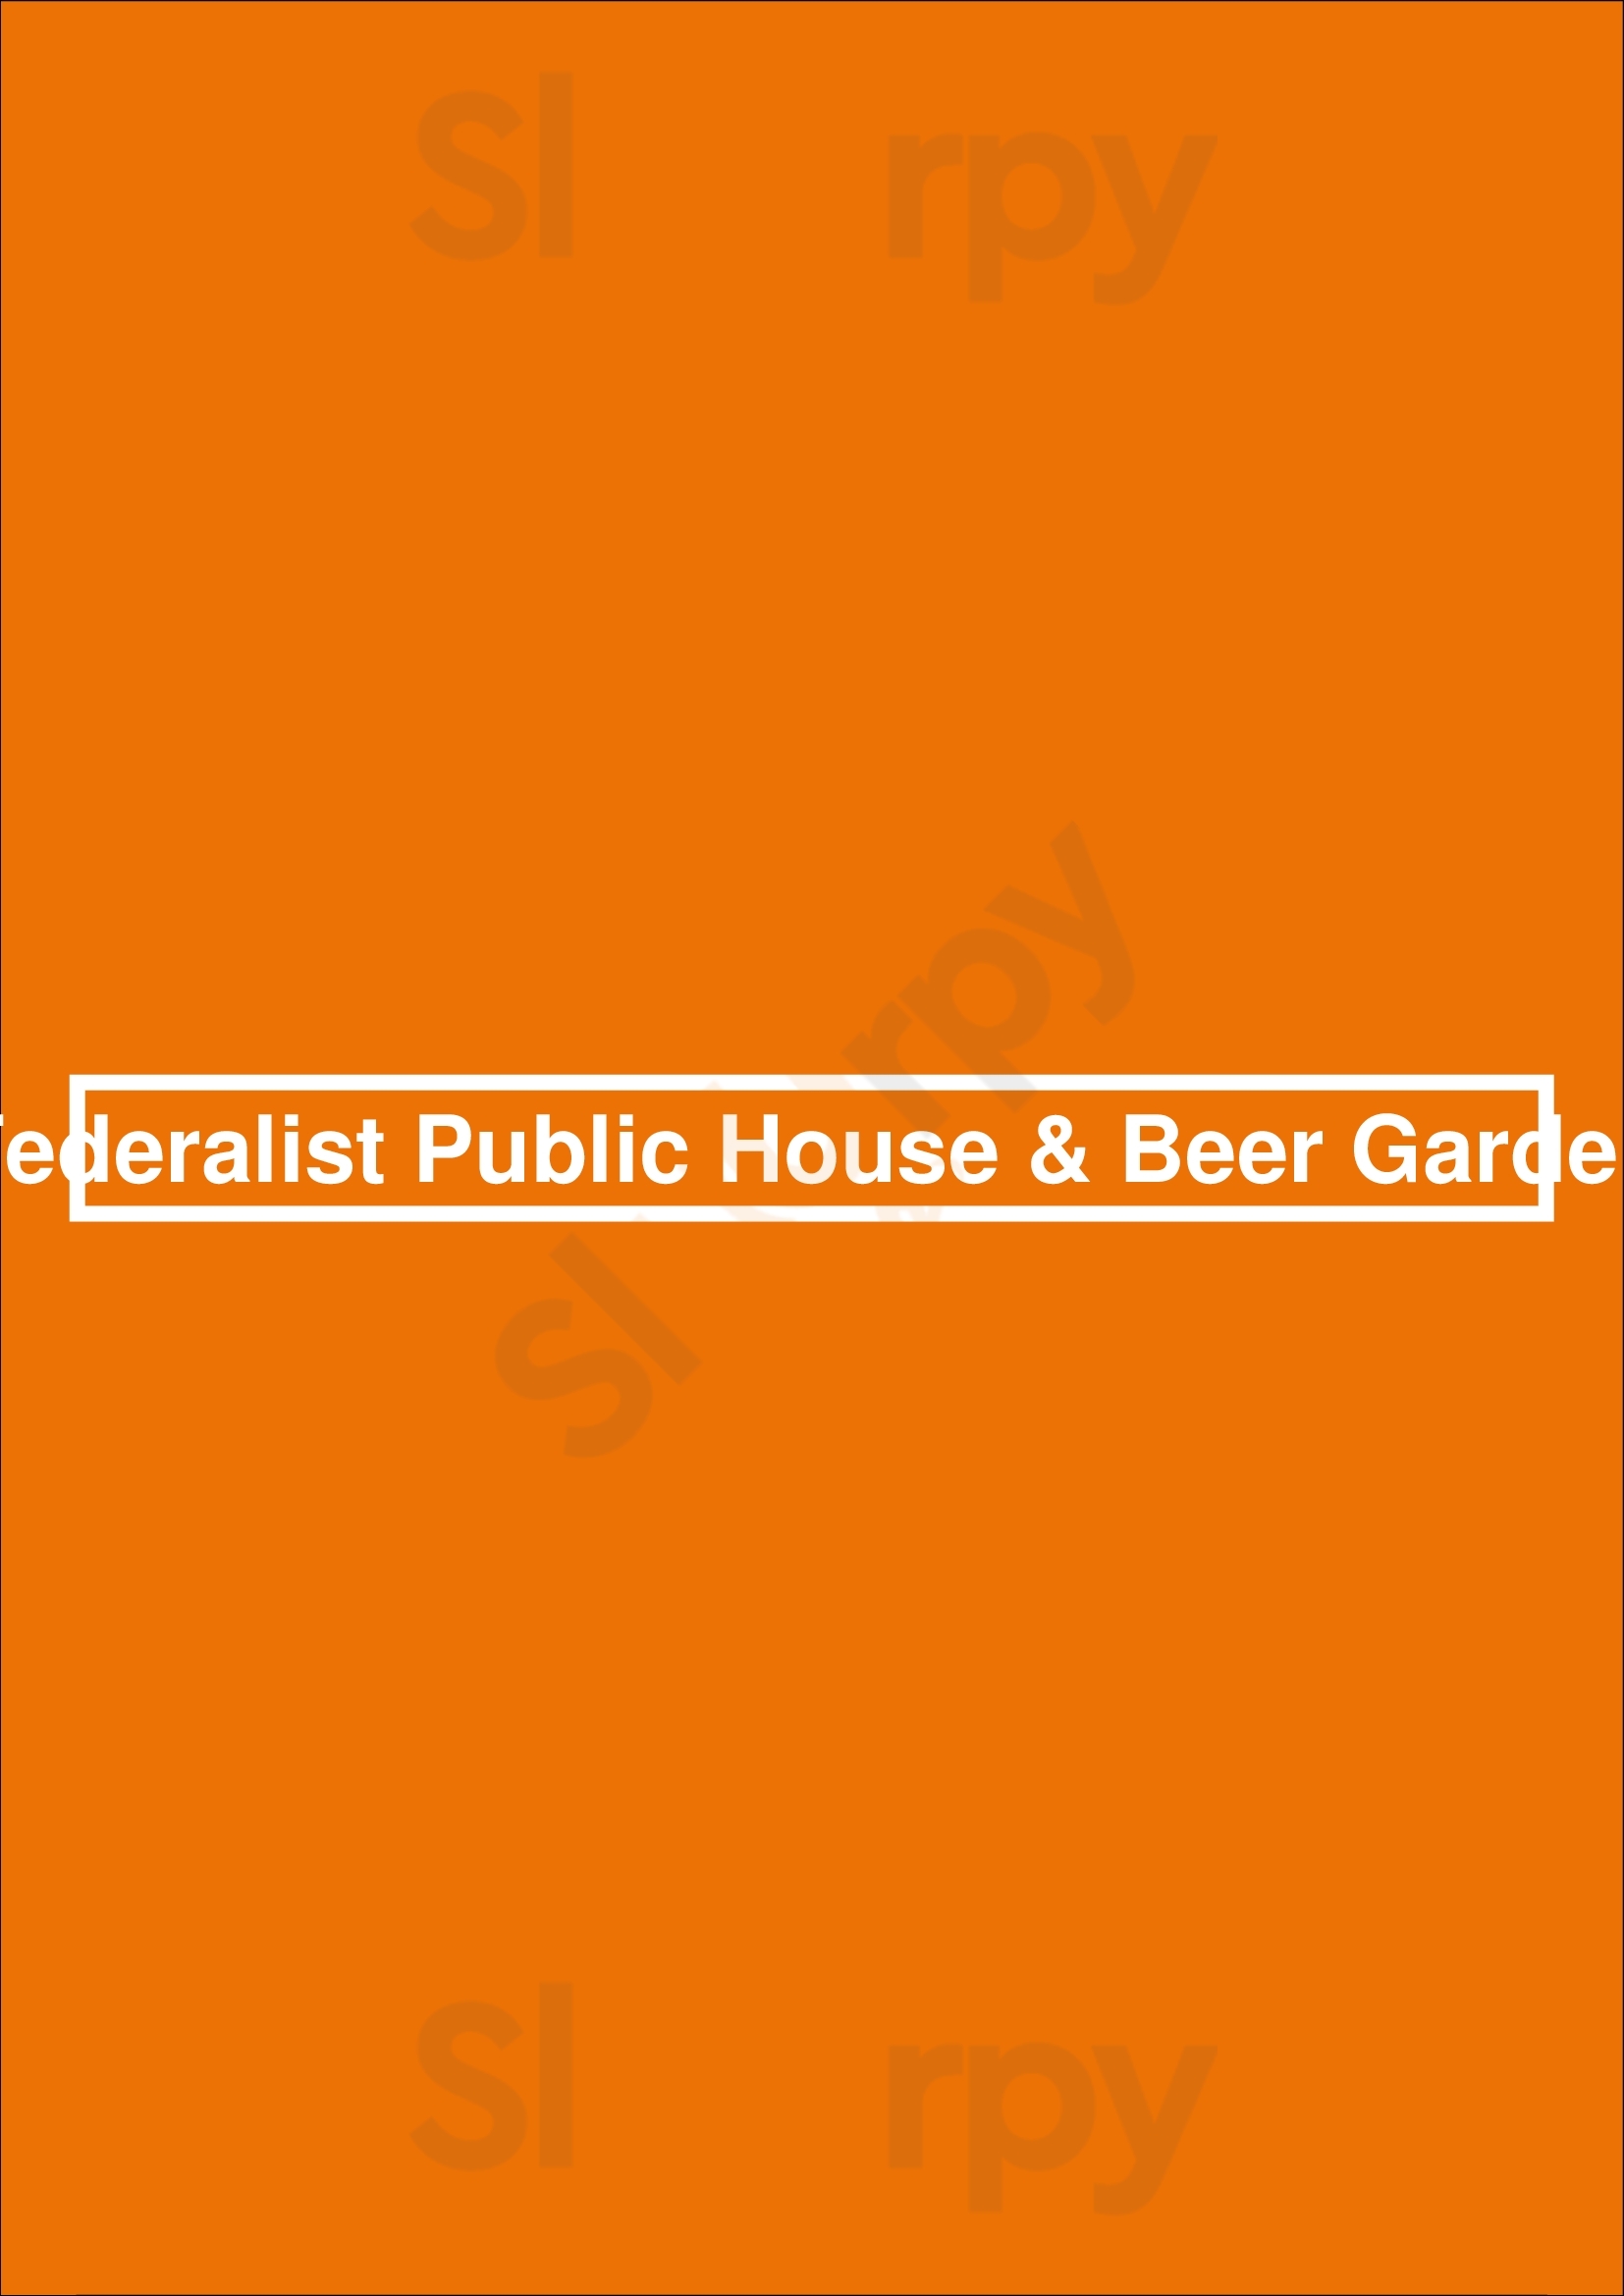 Federalist Public House & Beer Garden Sacramento Menu - 1